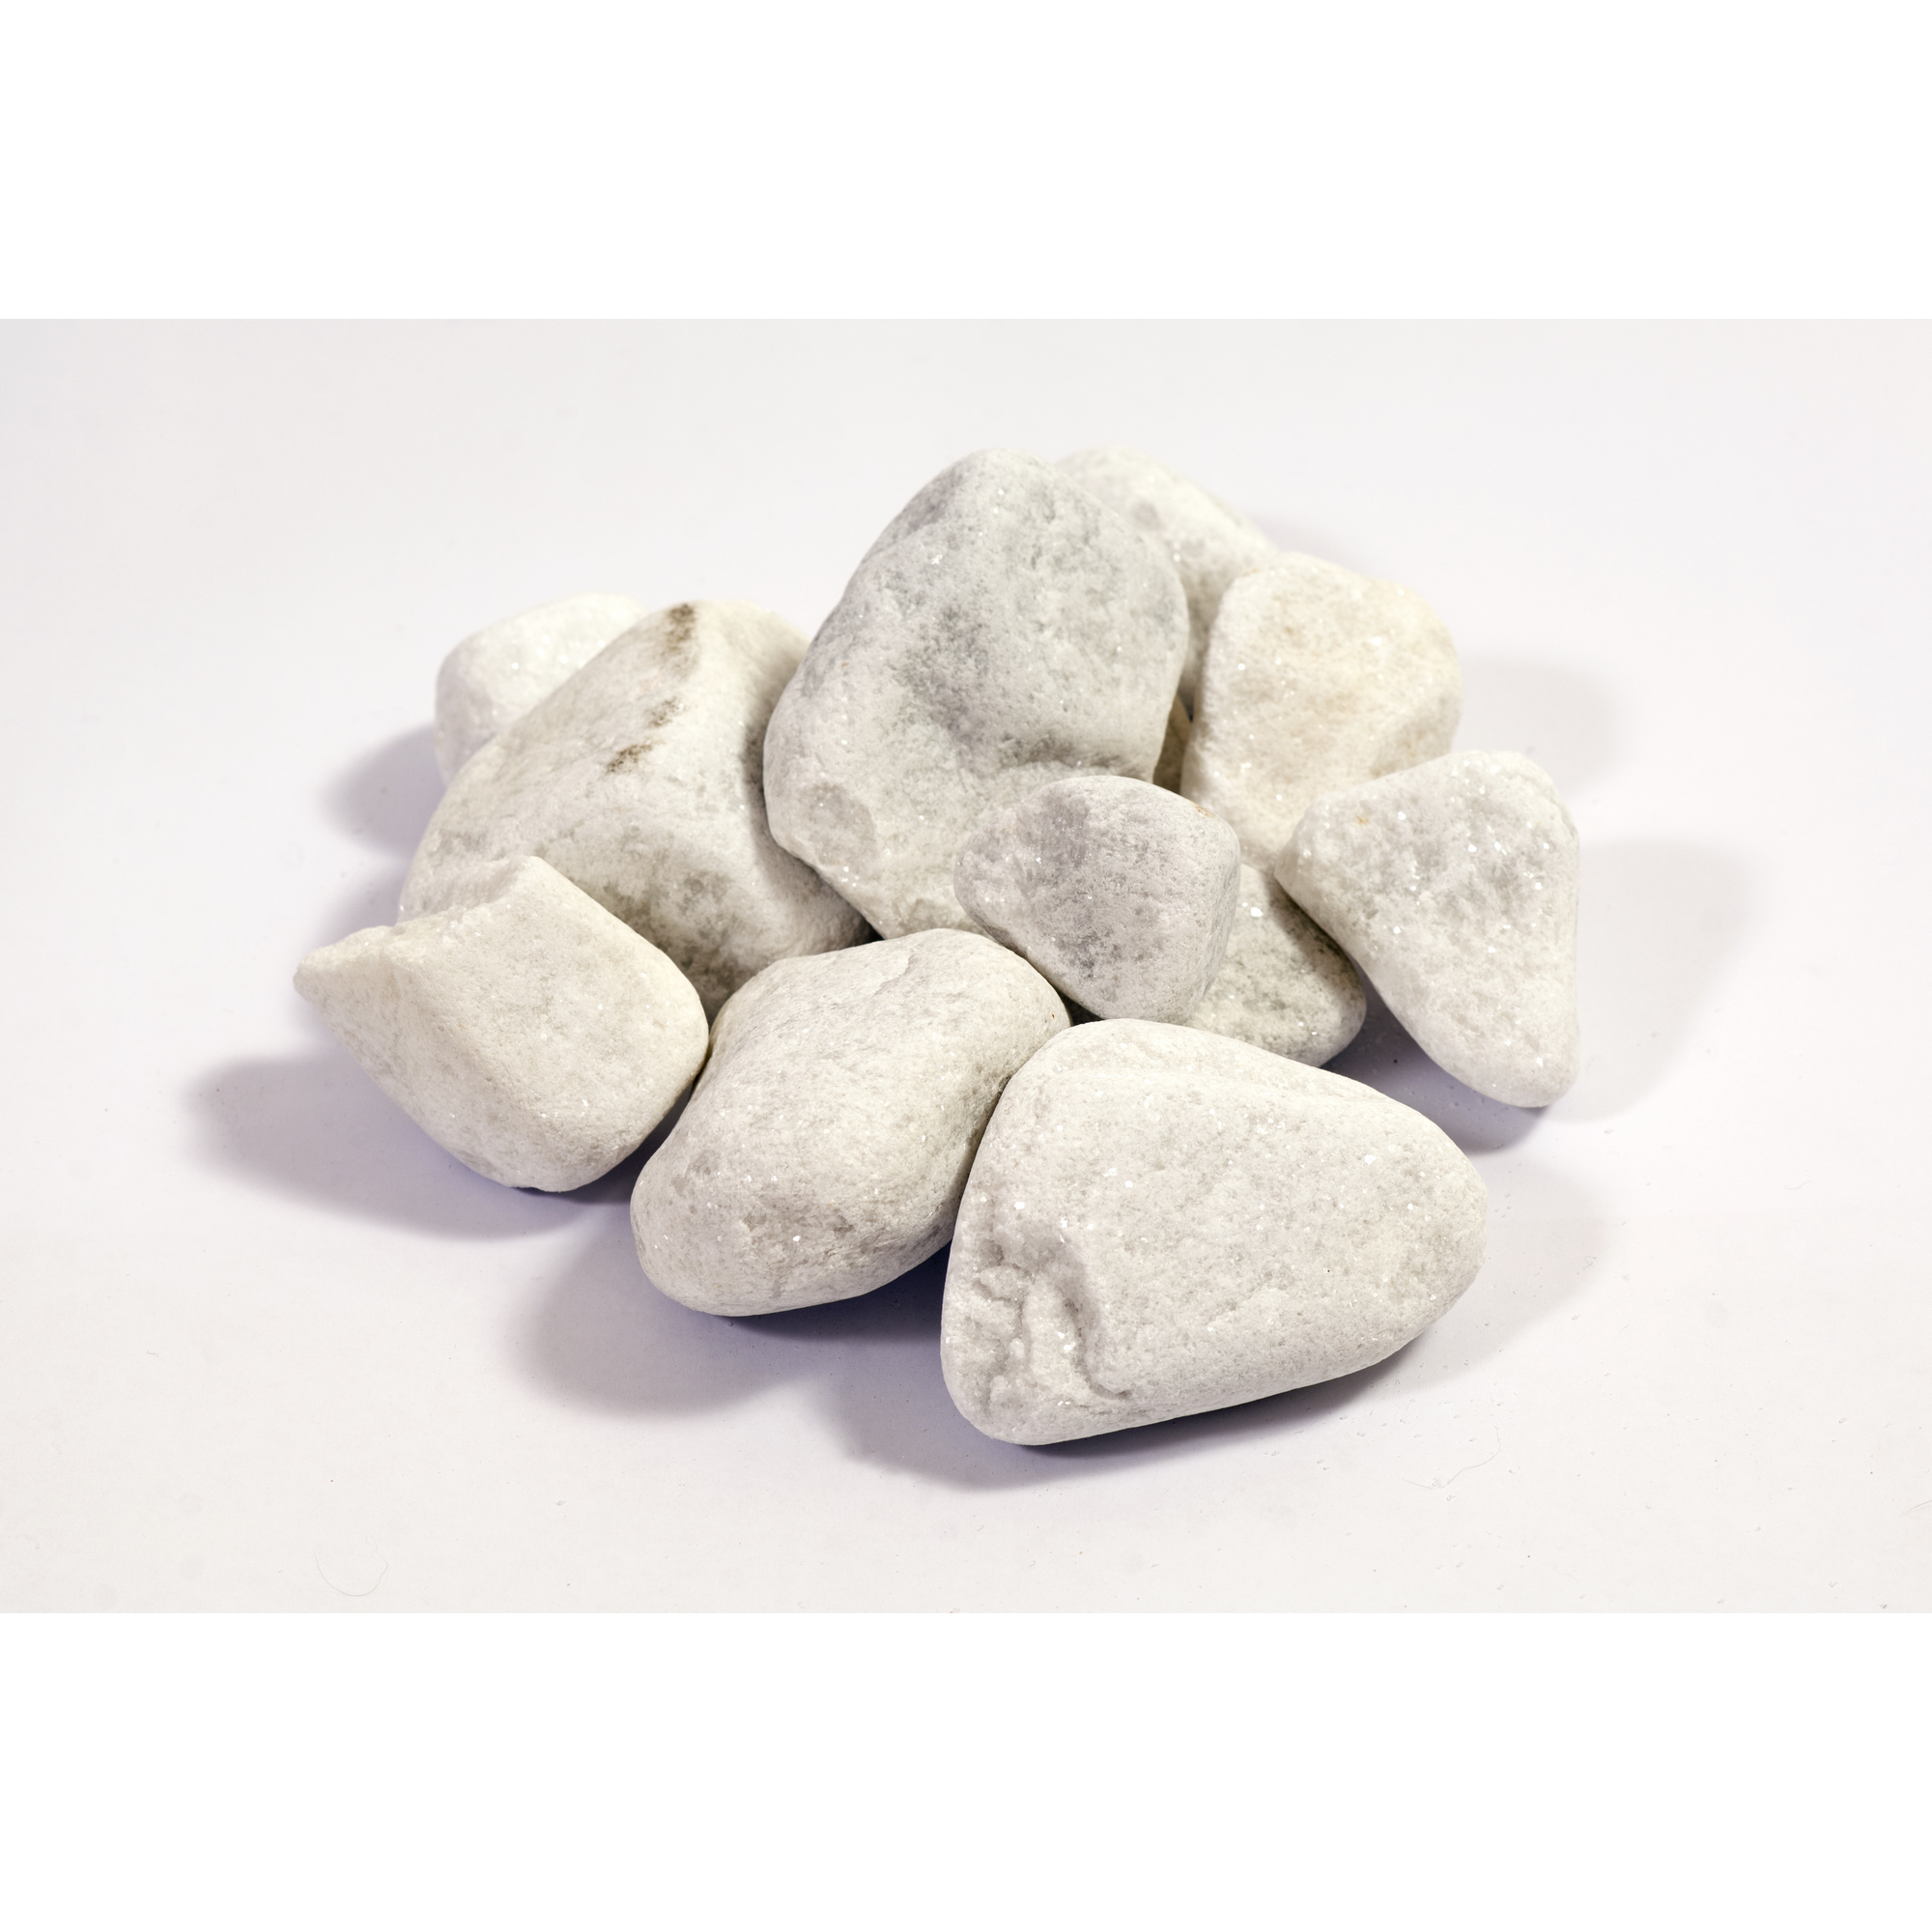 Carrara-Marmorkies weiß 40/60 mm 500 kg im Big Bag + product picture